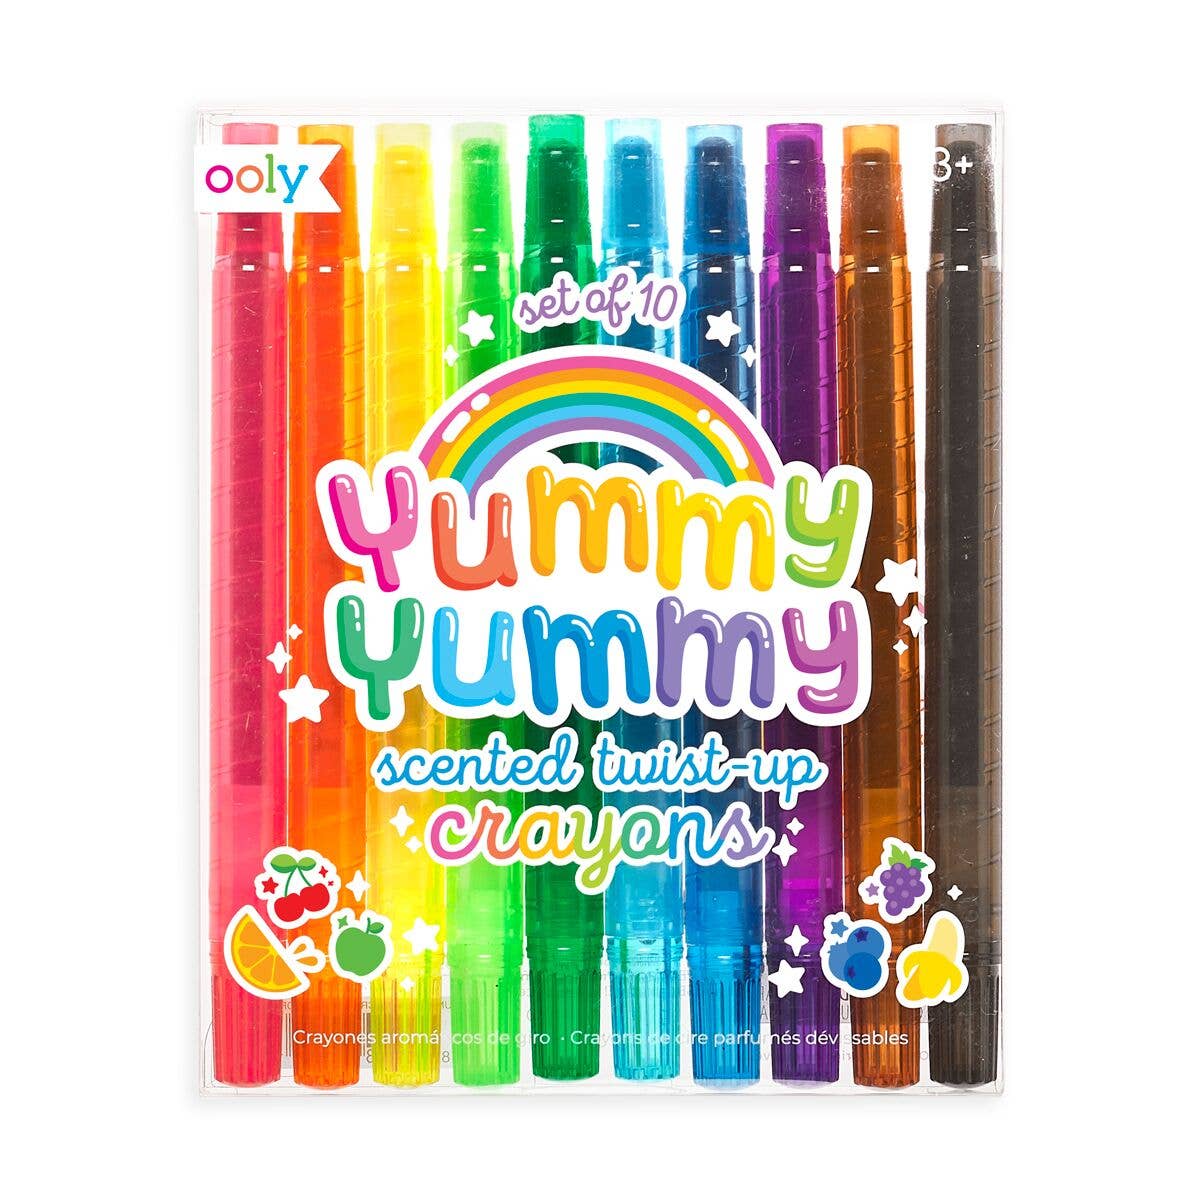 Chunkies Paint Sticks Original Pack - Set of 12